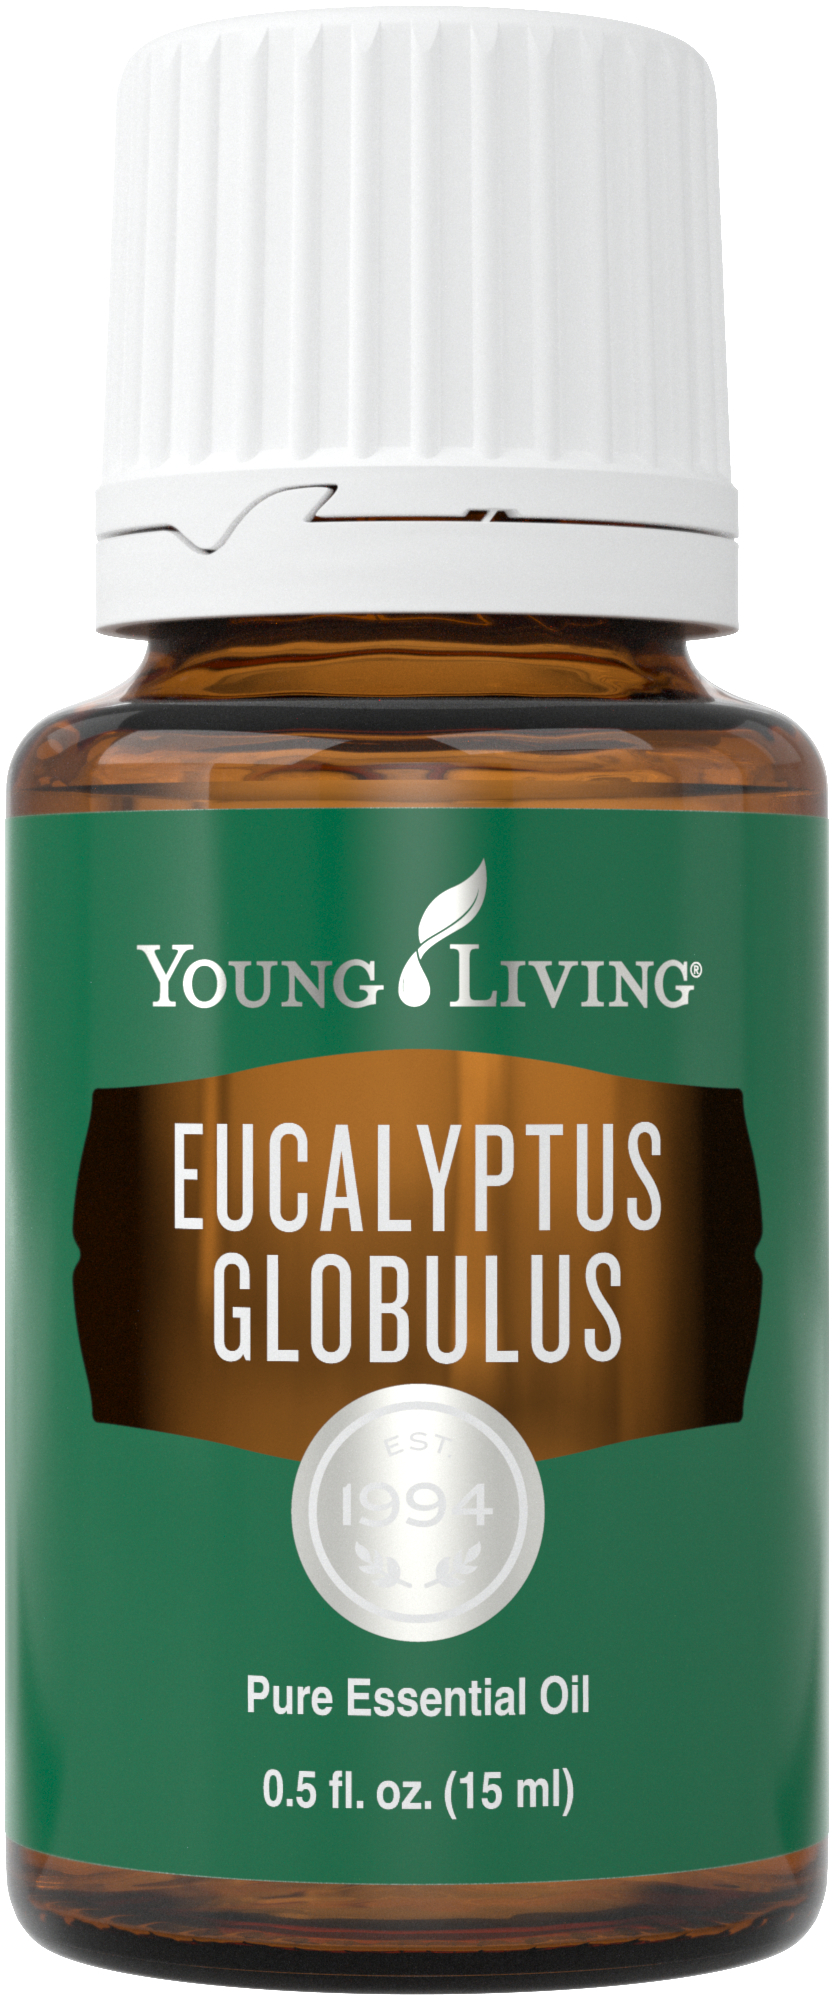 Eucalyptus Globulus Essential Oil - Young Living Essential Oils 